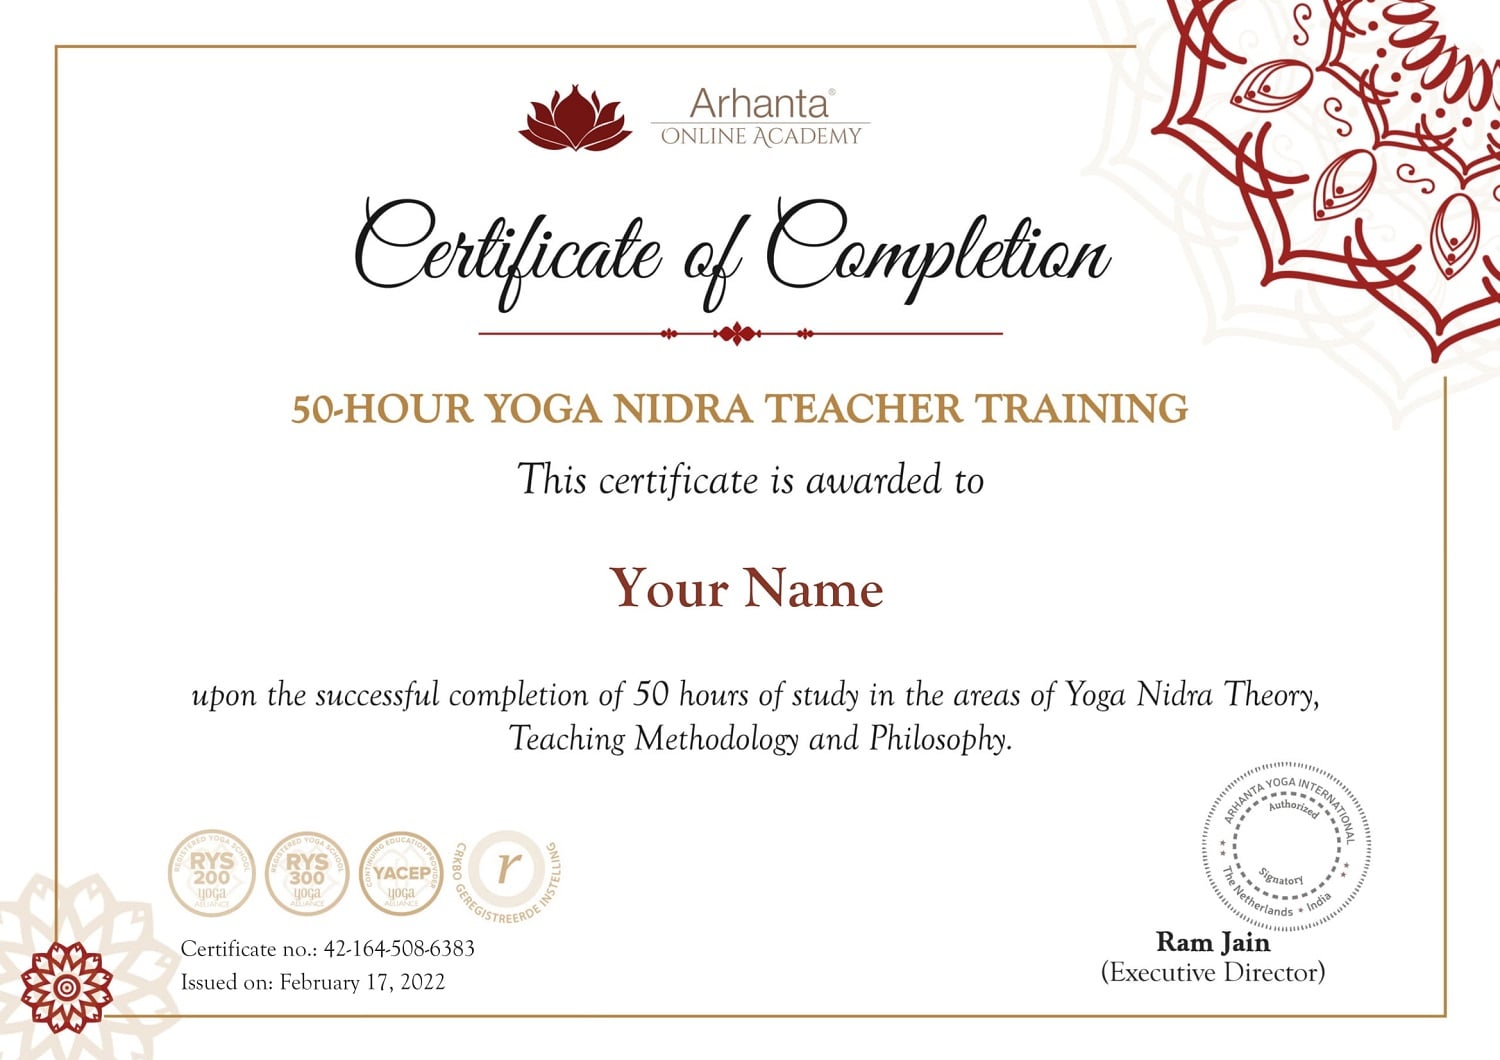 50-stündige Yoga Nidra Lehrerausbildung